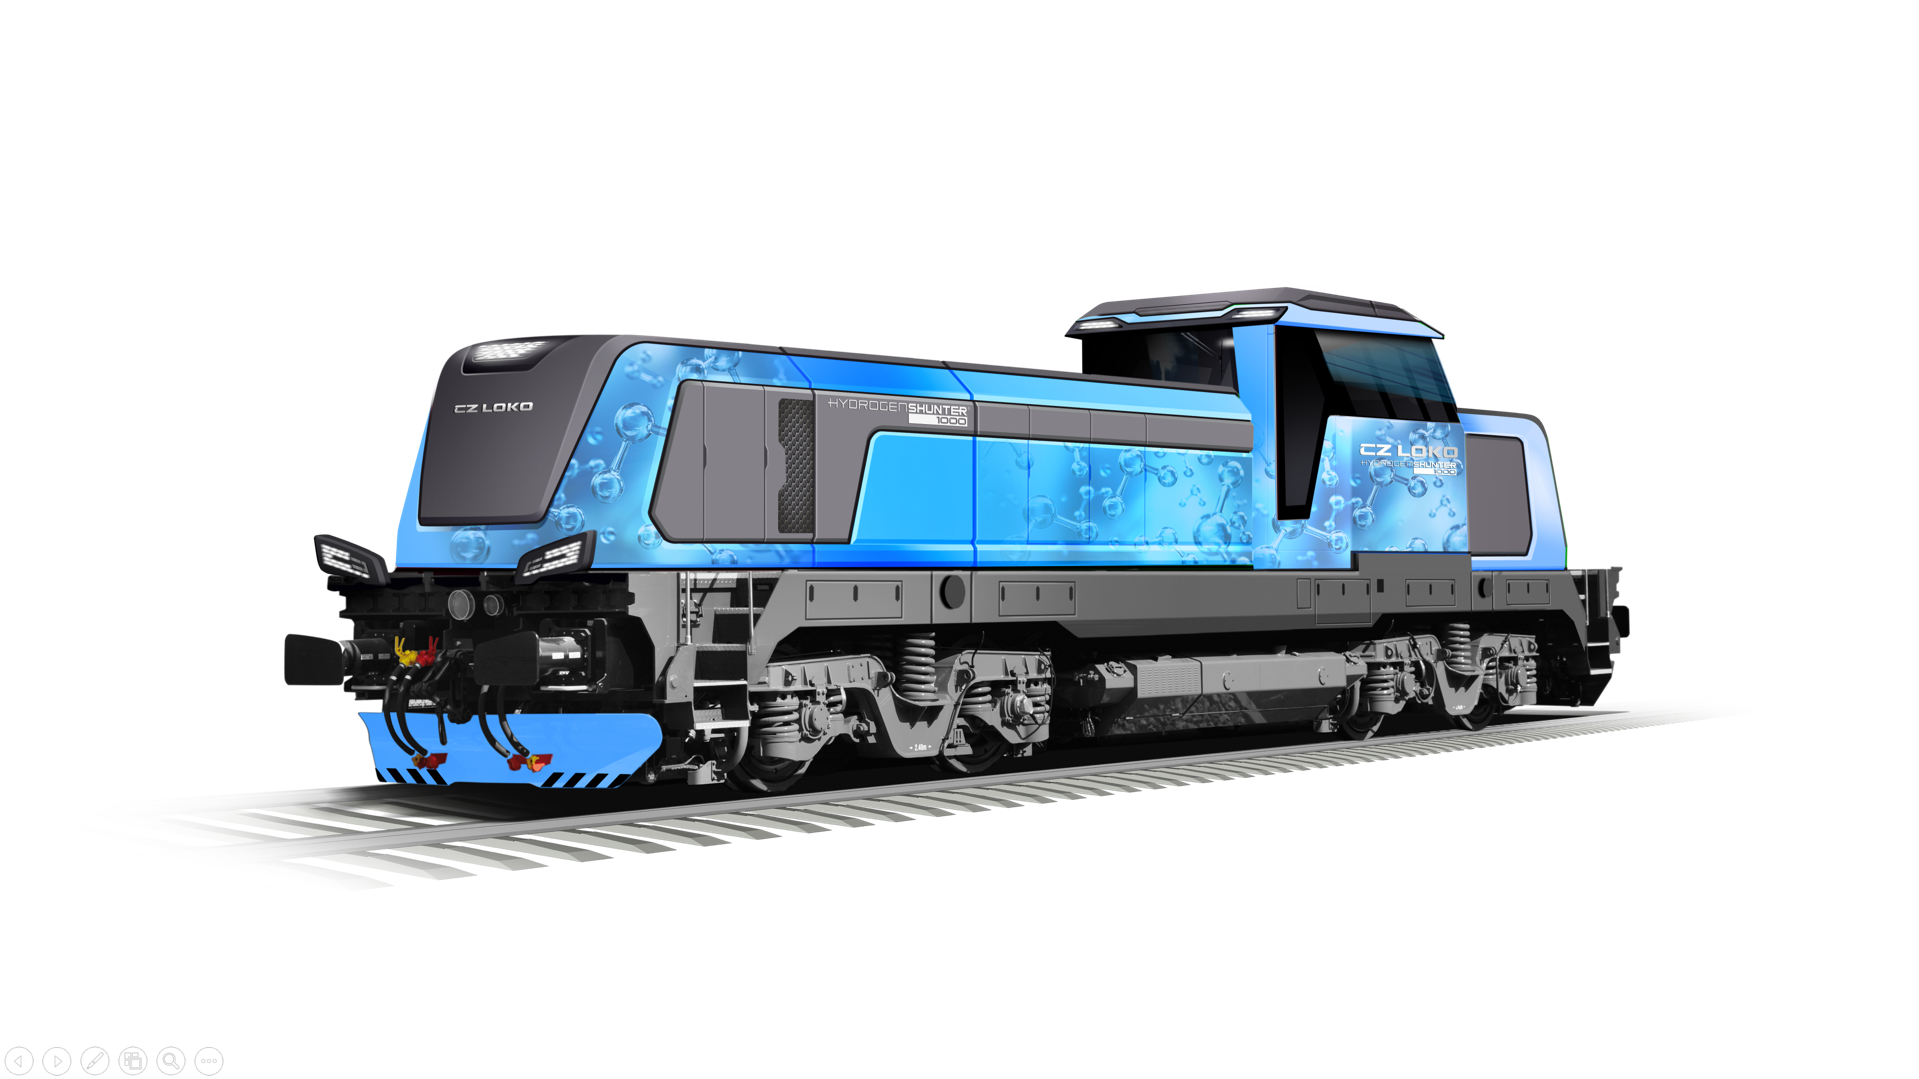 3D-model of HydrogenShunter 1000 locomotive by CZ Loko